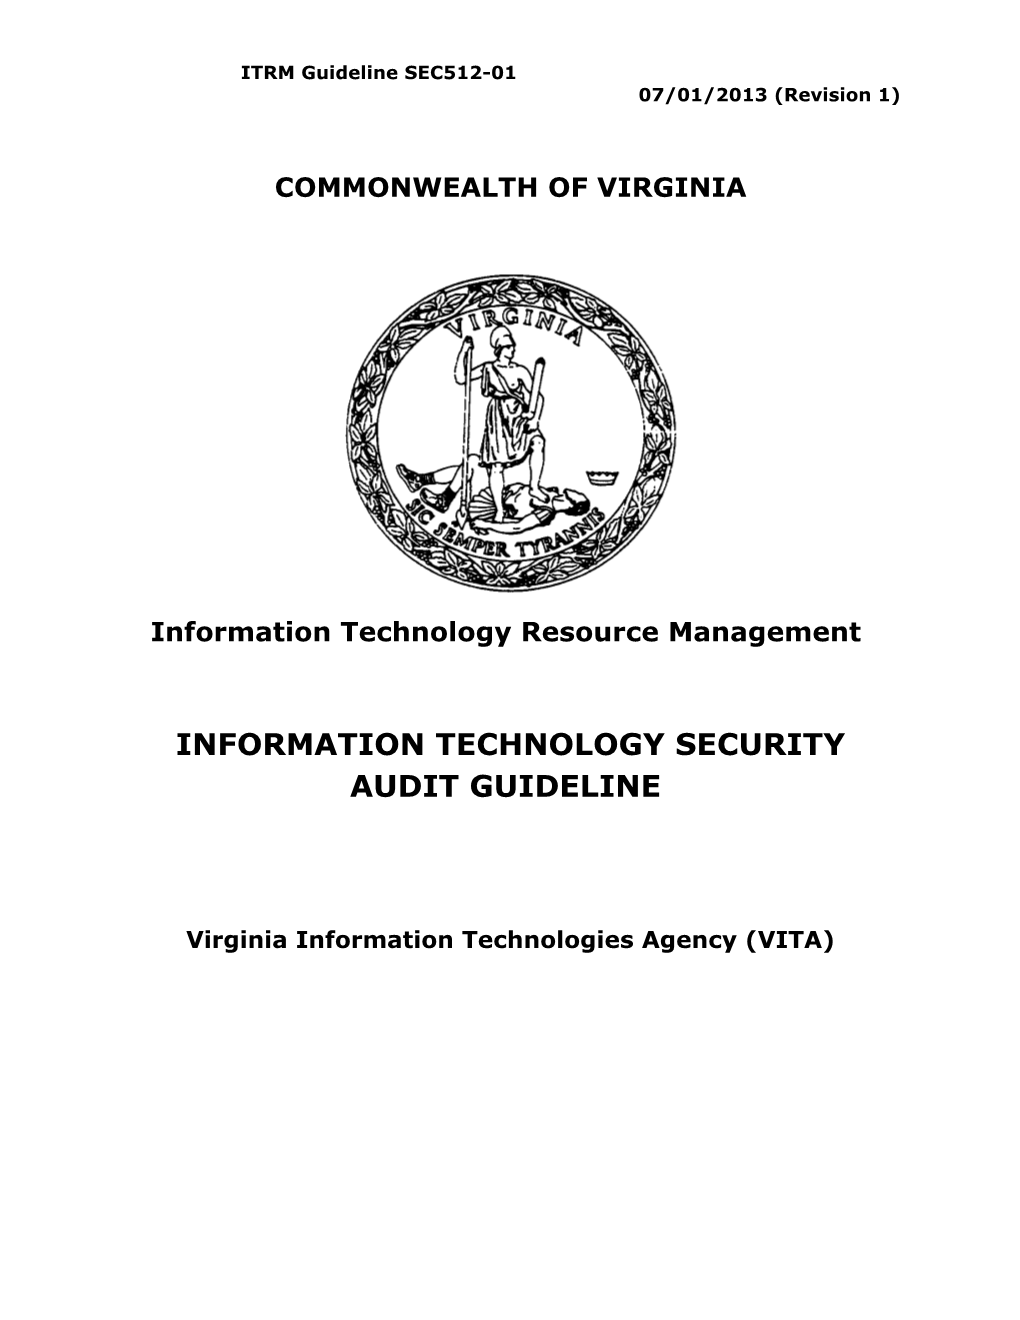 IT Security Audit Guideline - SEC512-01 (7-1-2013)